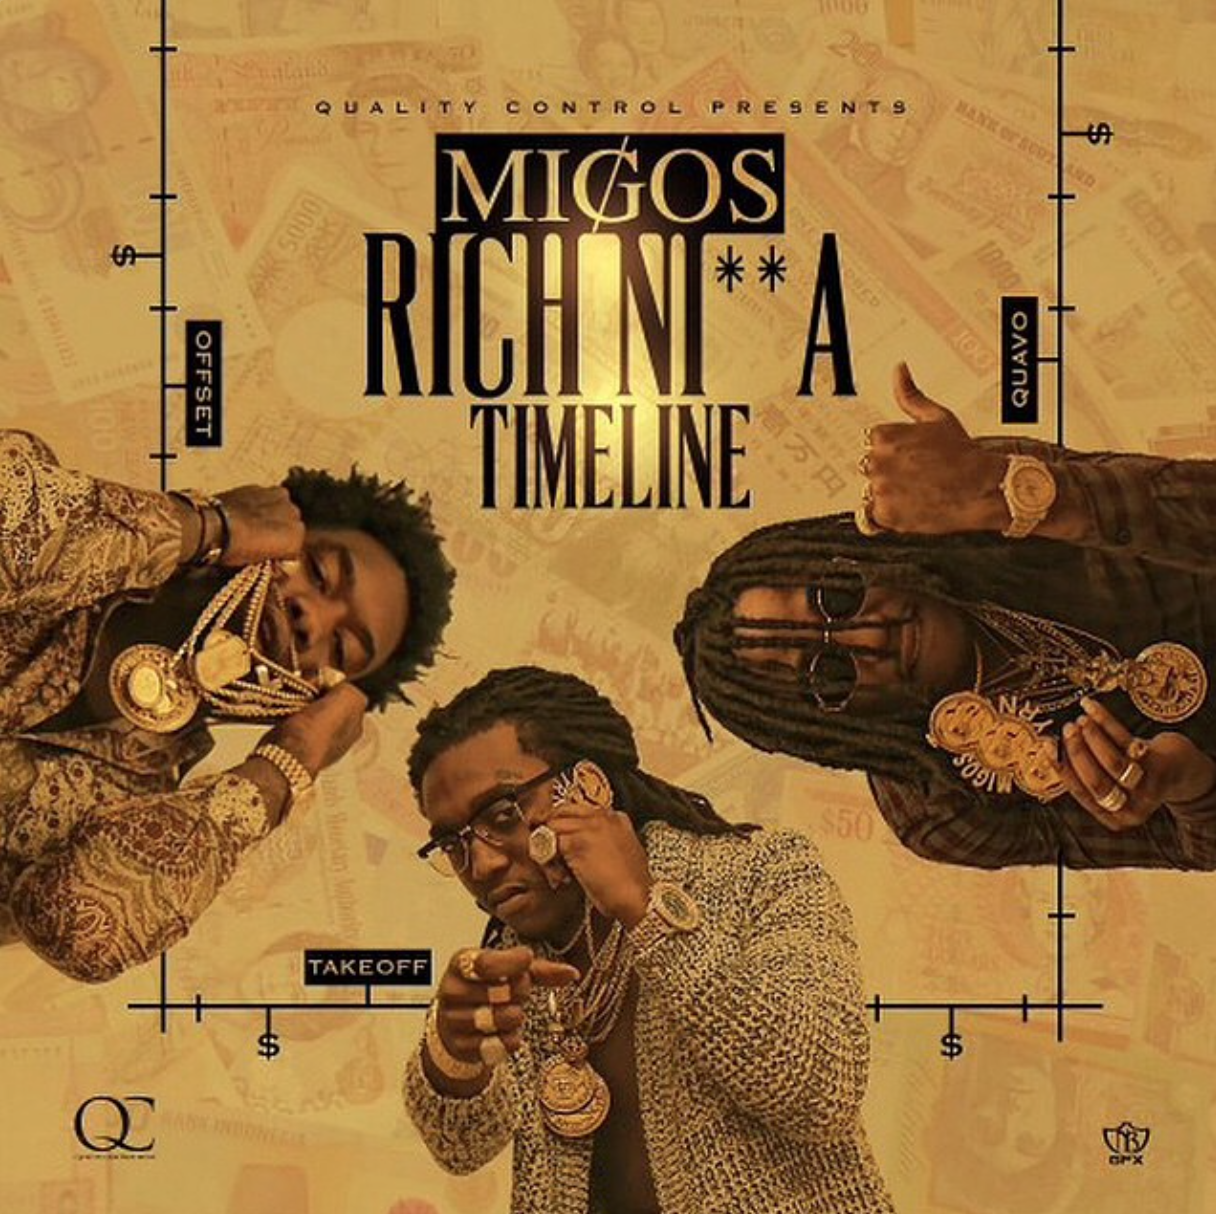 Migos Rich N Timeline Instagram